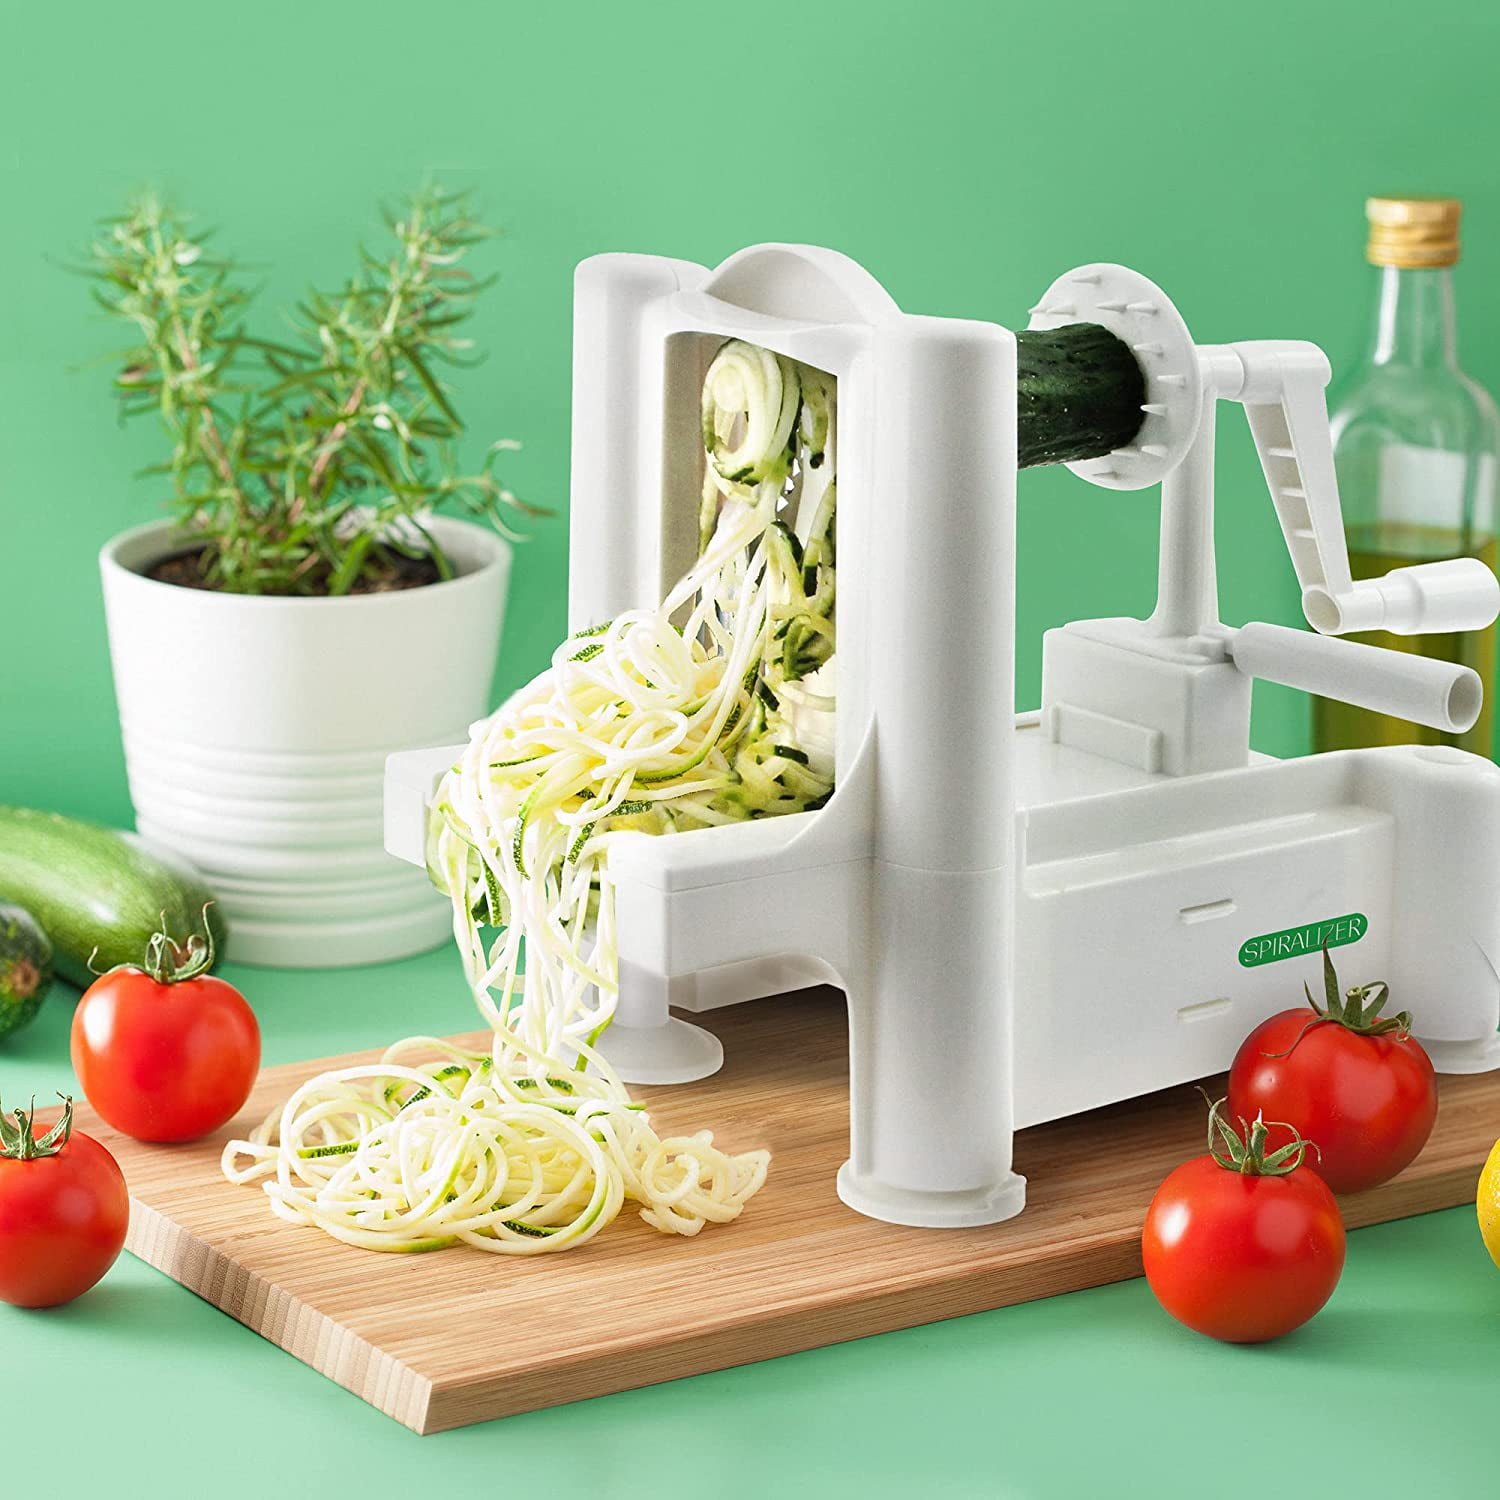 WellToBe 6-Blade Vegetable Spiralizer Spiral Slicer Veggie Pasta Spaghetti Maker for Healthy Low Carb/Paleo/Gluten - 304 Food Stainless Steel Body